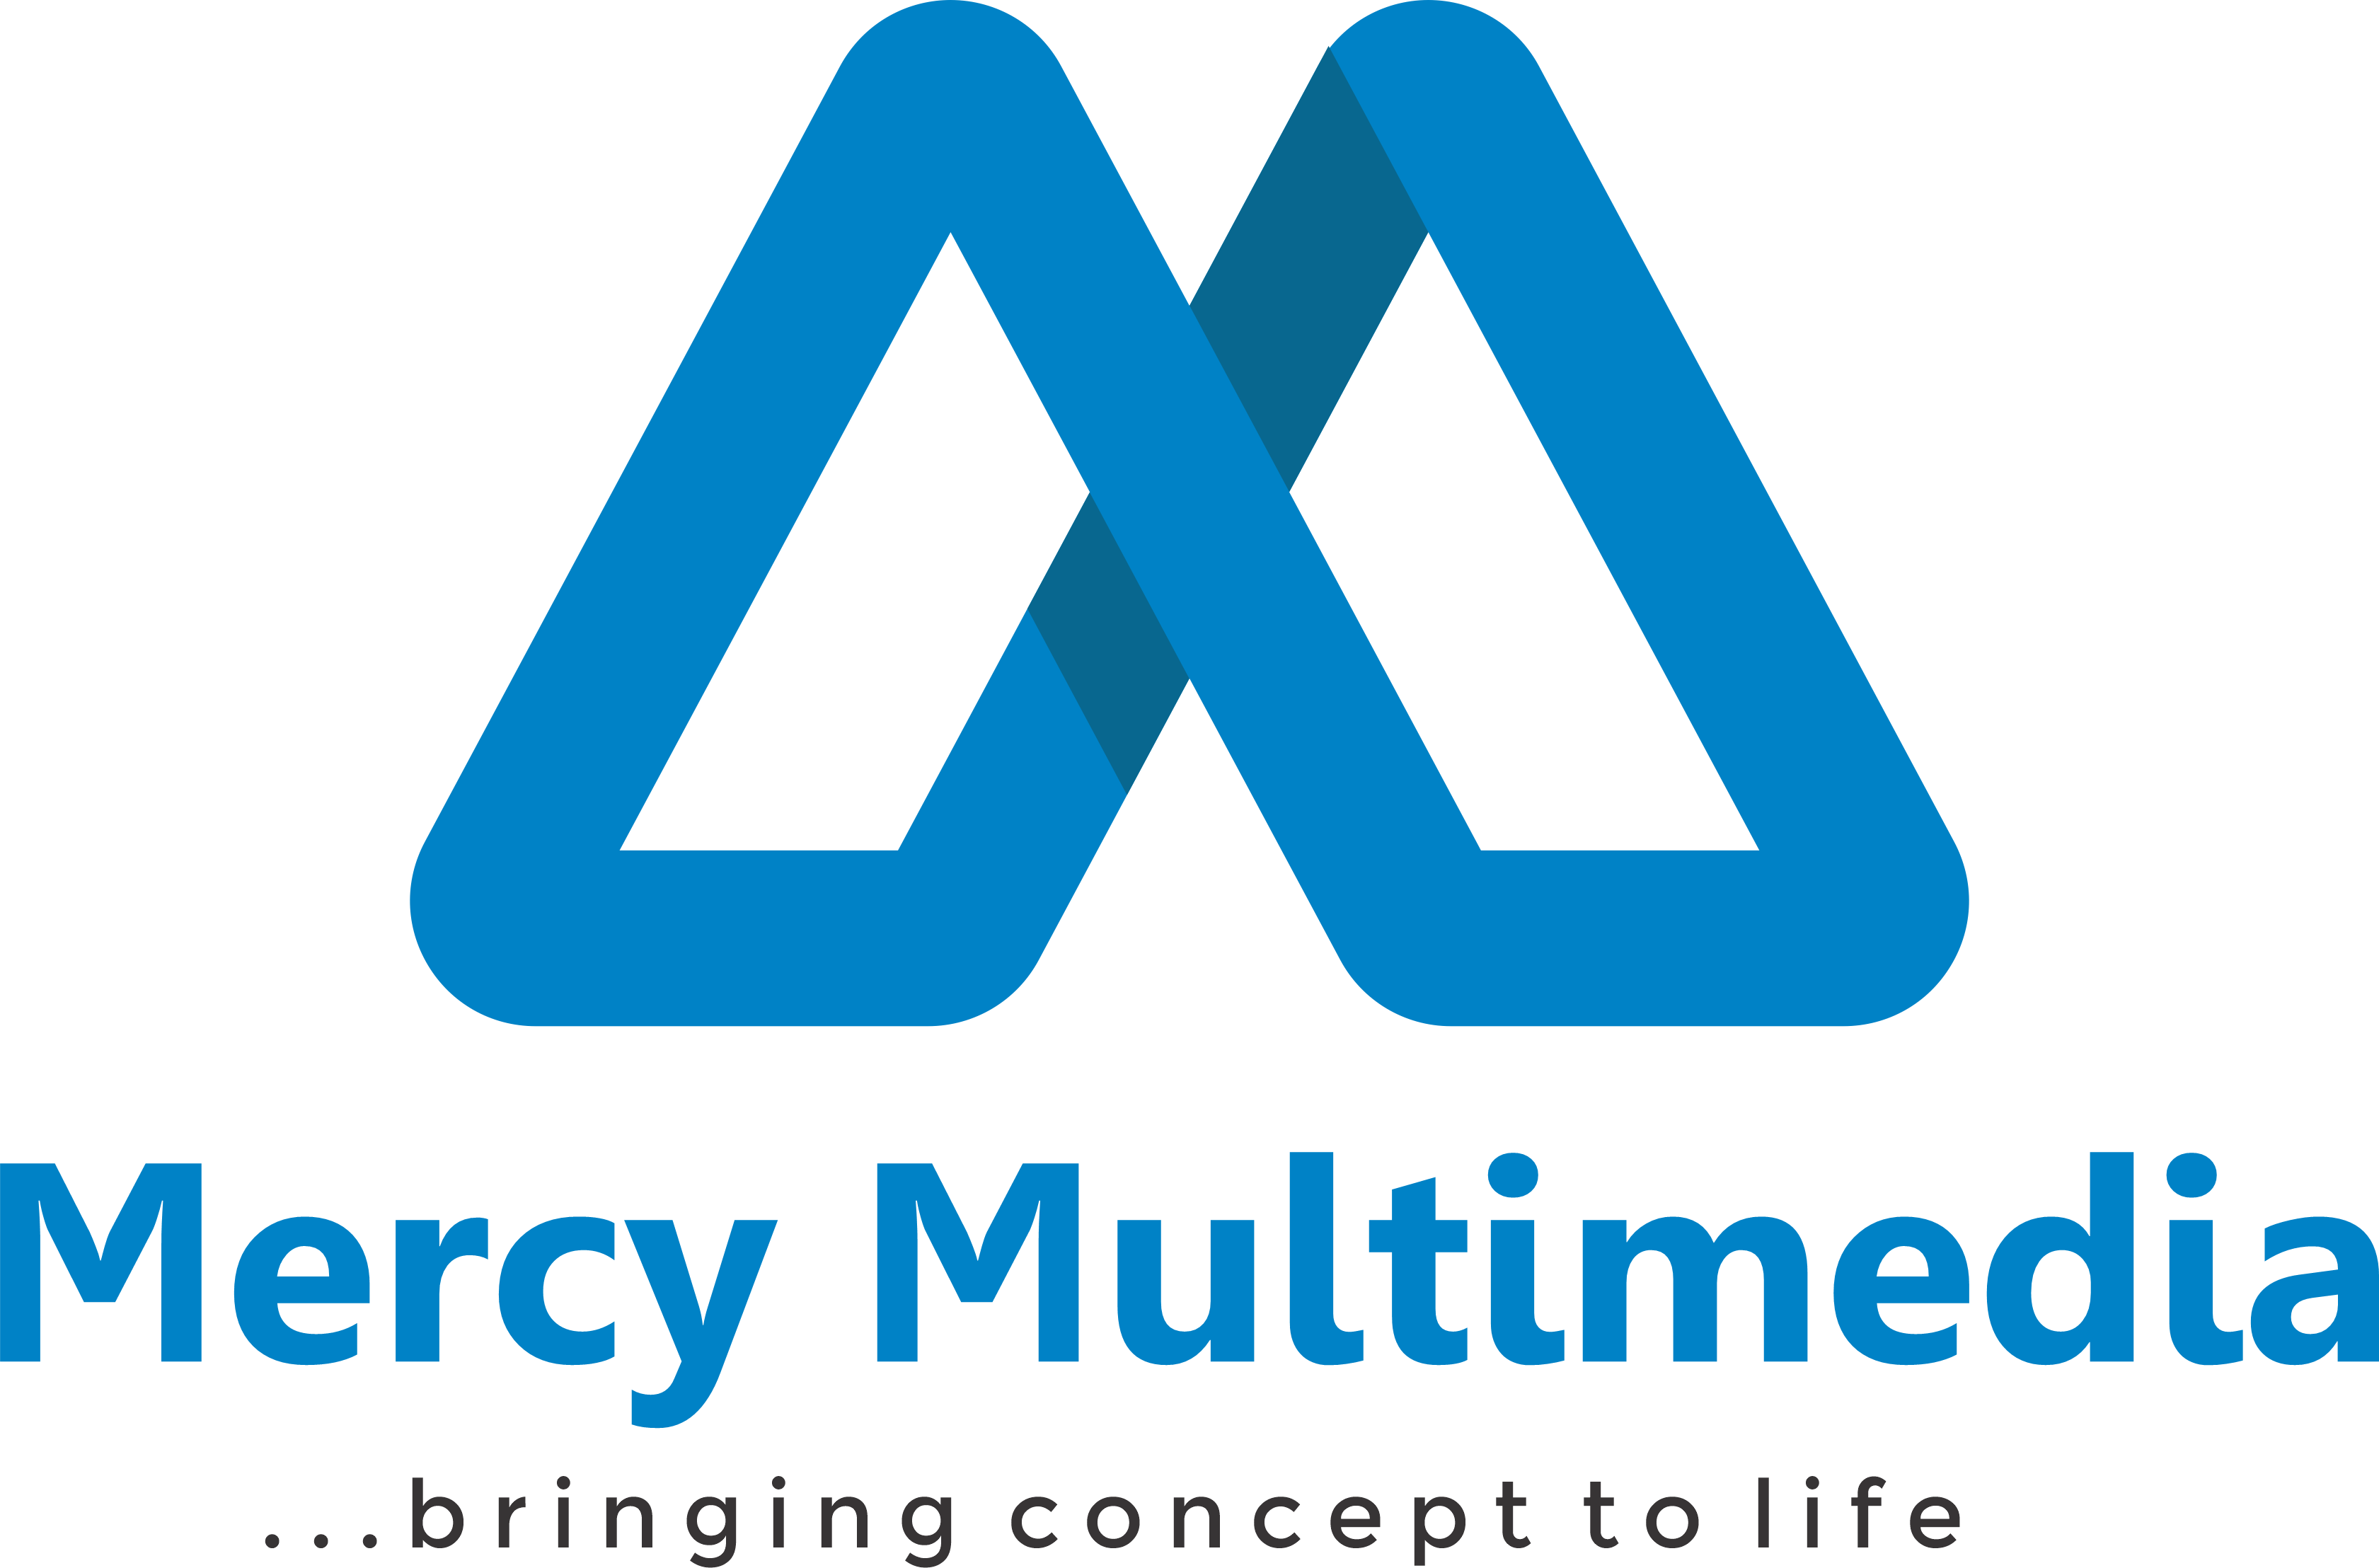 Mercy multimedia logo png